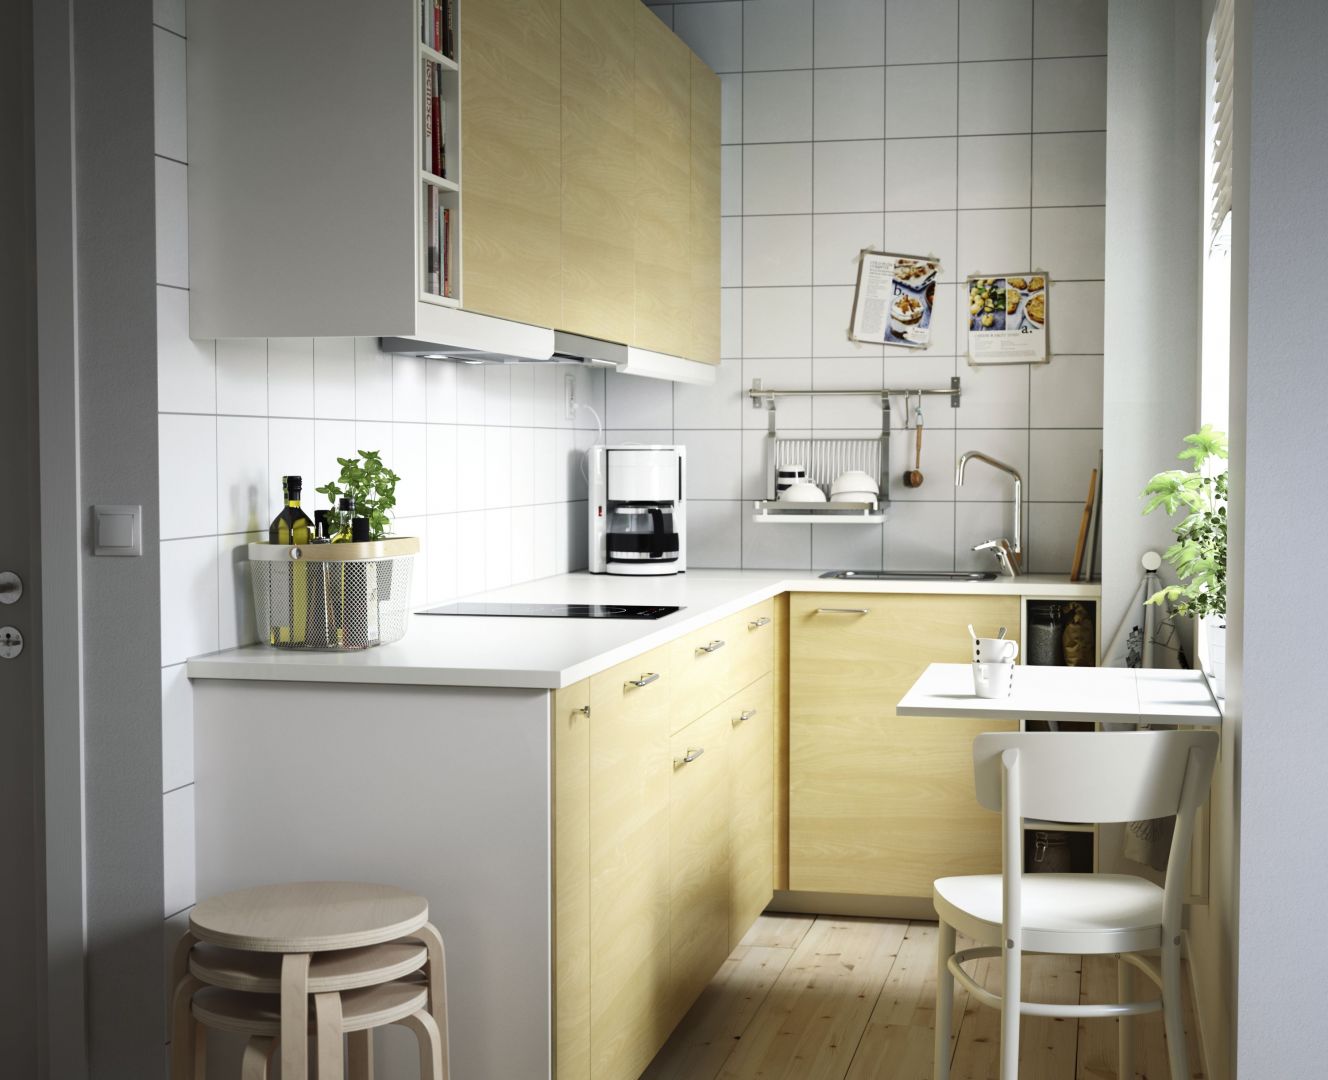 Kuchnia idealna dla singla - IKEA Metod. Fot. IKEA